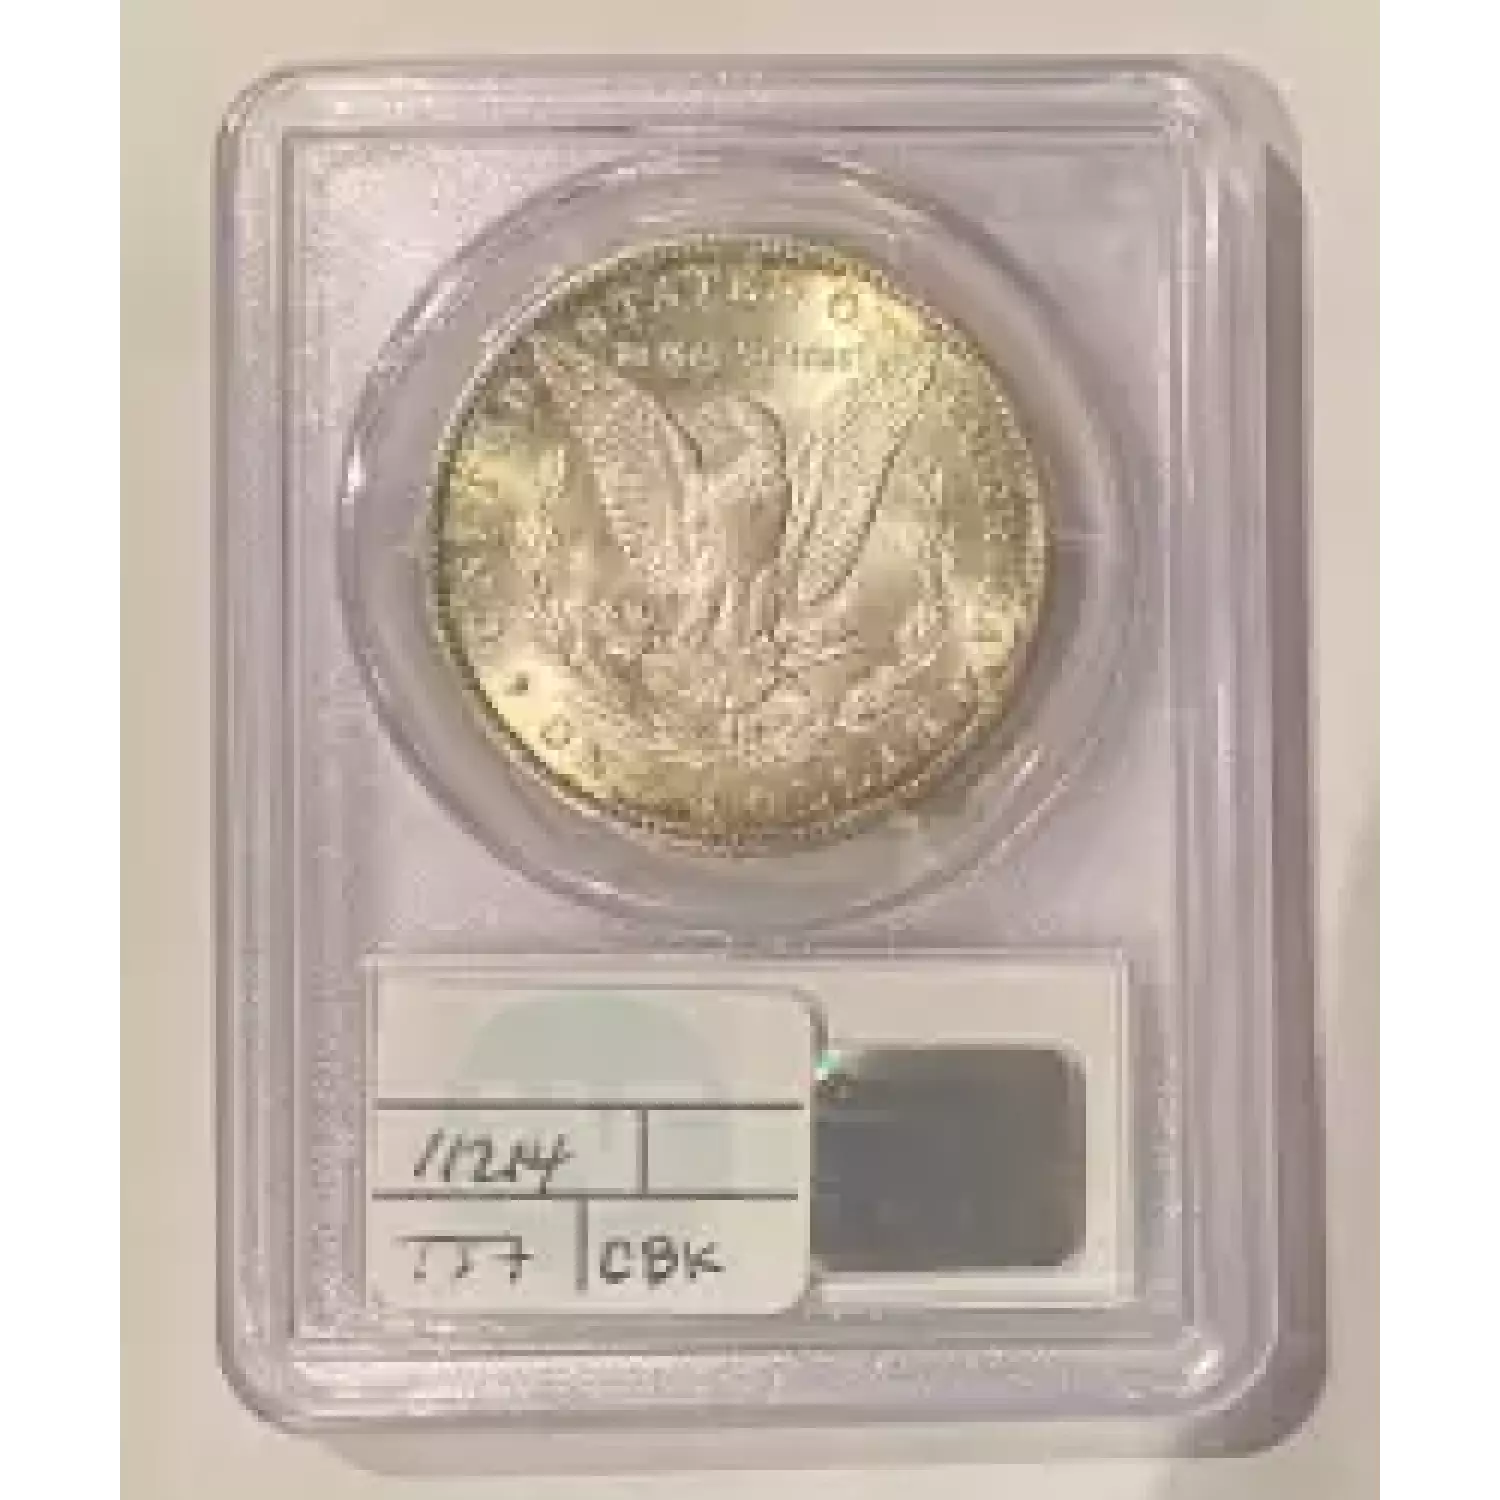 1882-CC $1 (2)